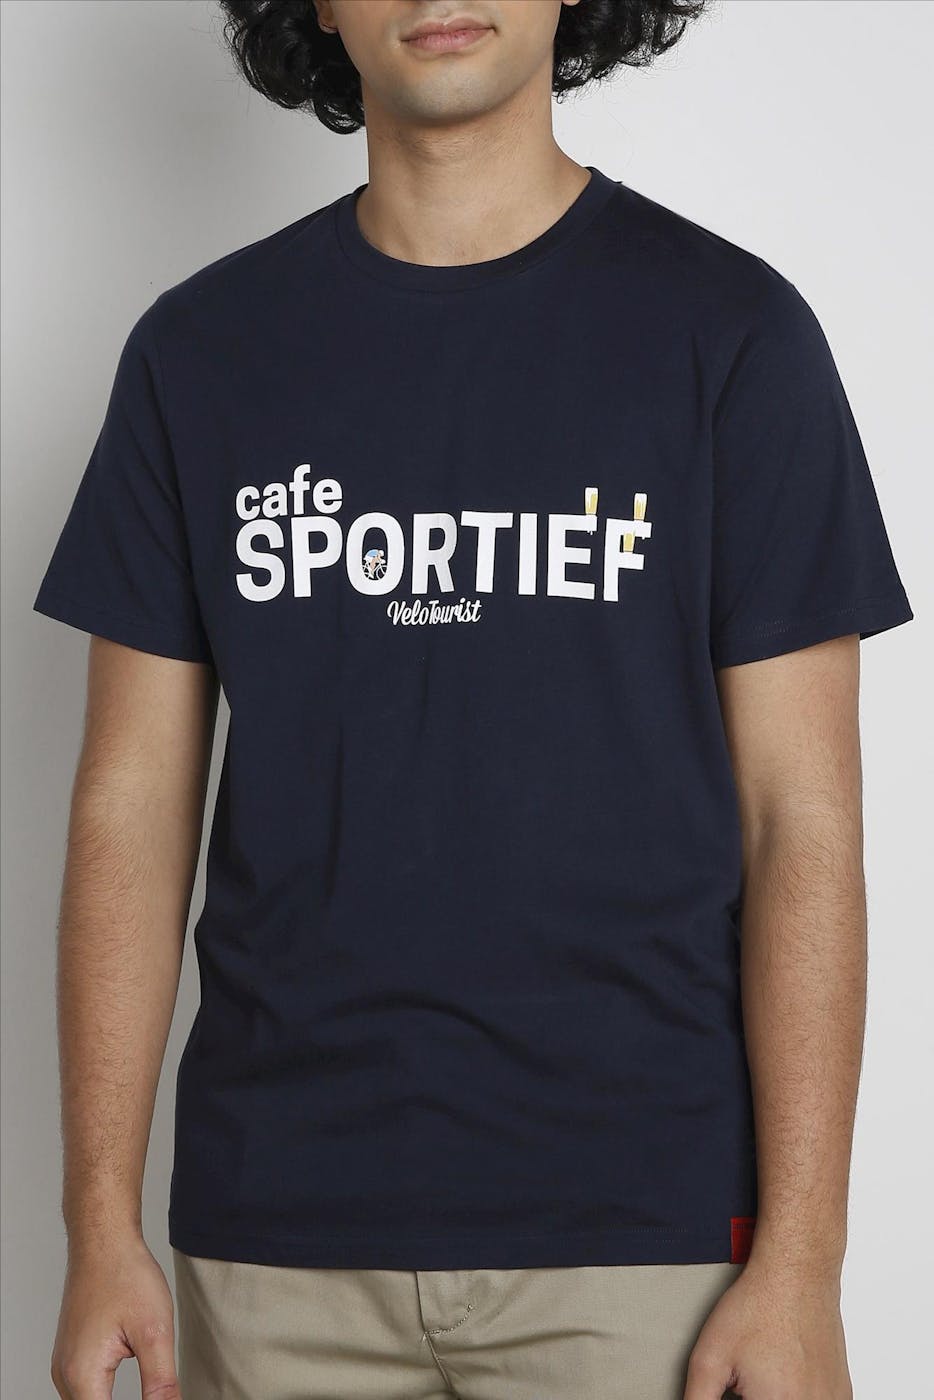 Antwrp - Donkerblauwe Cafe Sportief t-shirt